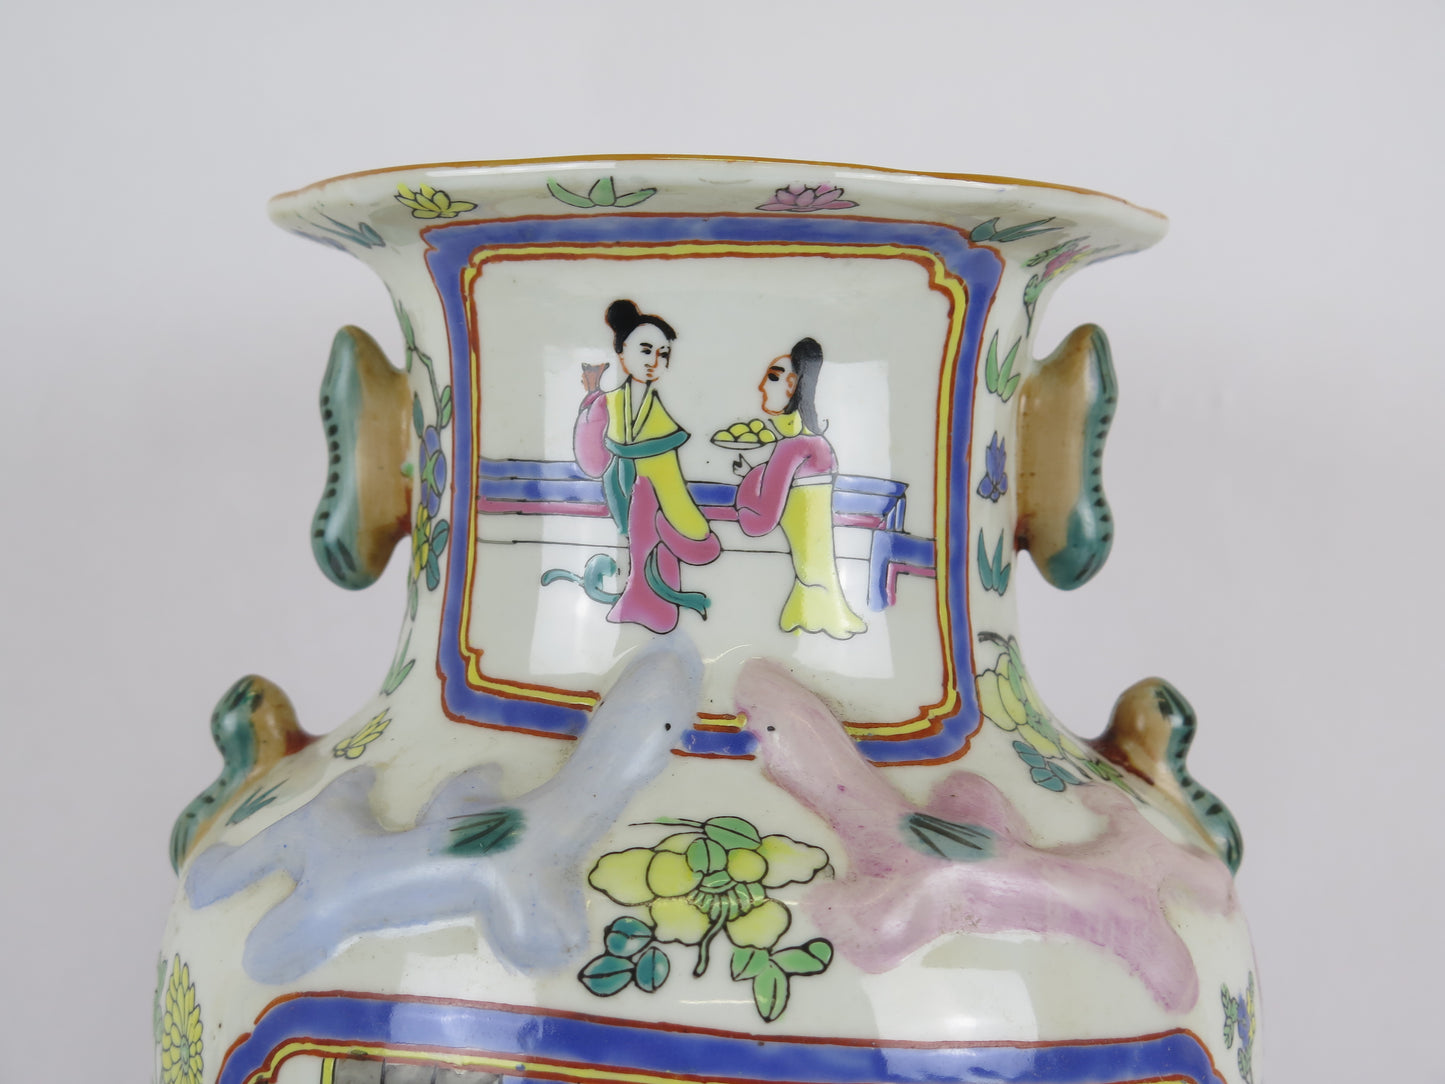 Vaso di ceramica smaltata vintage dipinto a mano con motivi floreali e vegetali Cina Asia '900 CM5